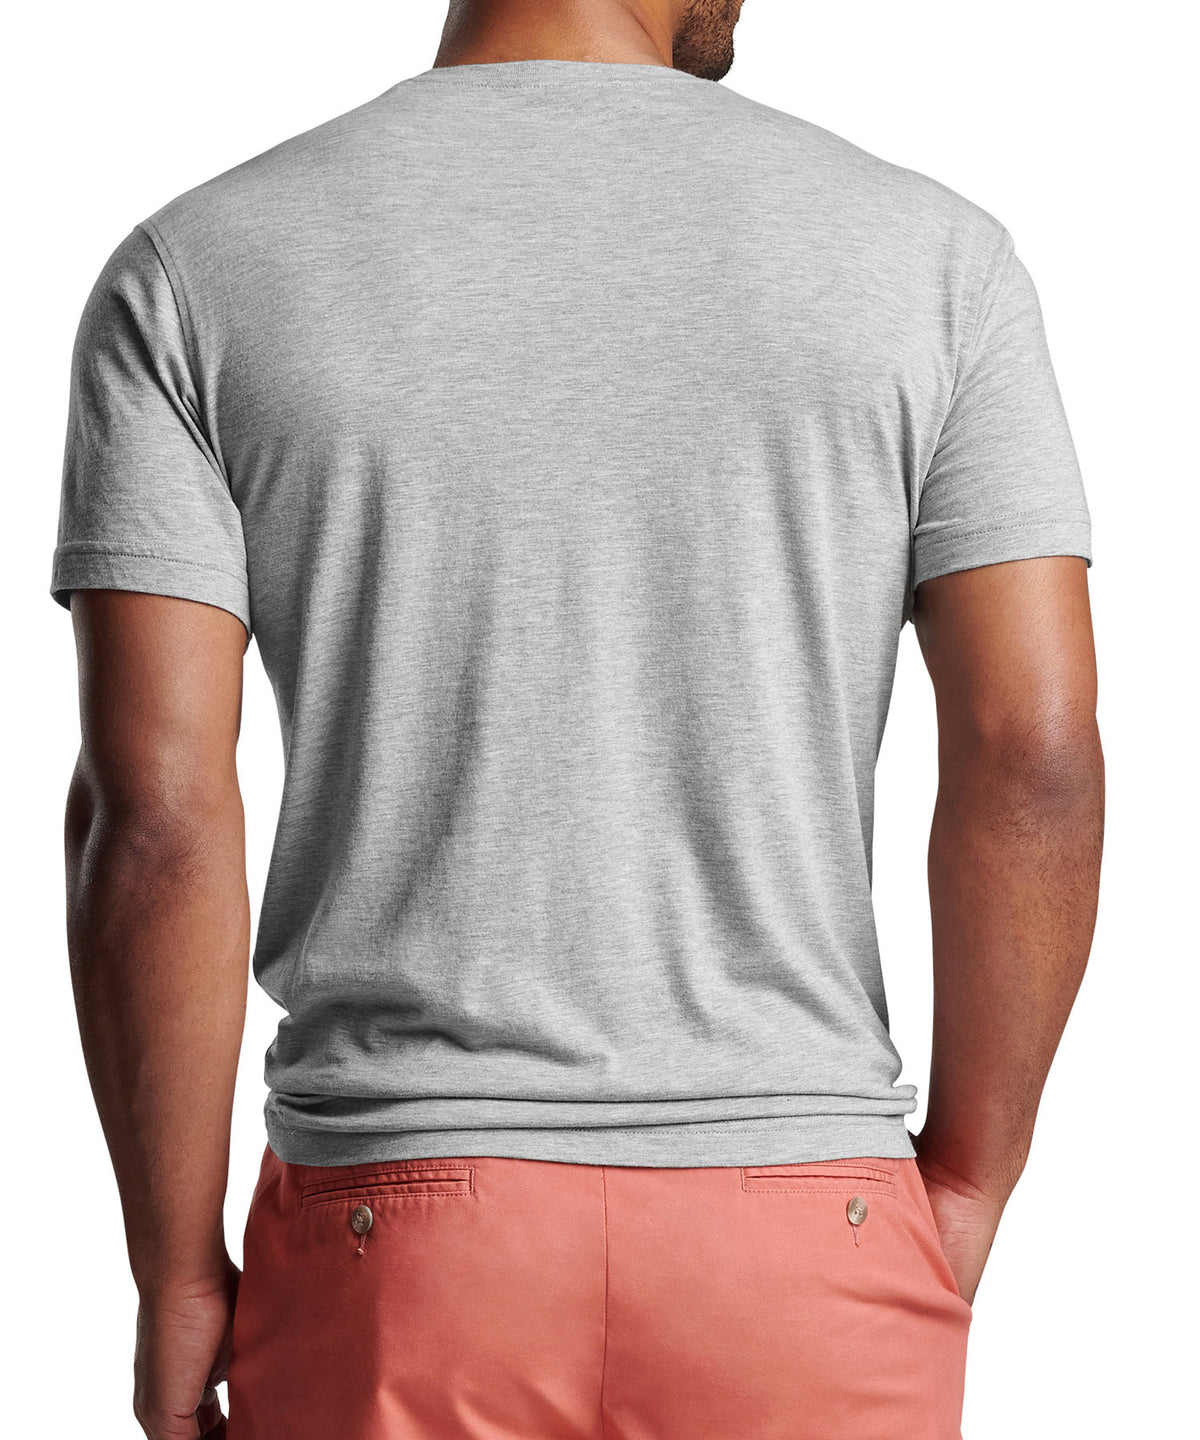 Peter Millar Short Sleeve Lava Wash Crew Neck Pocket T-Shirt, Big & Tall